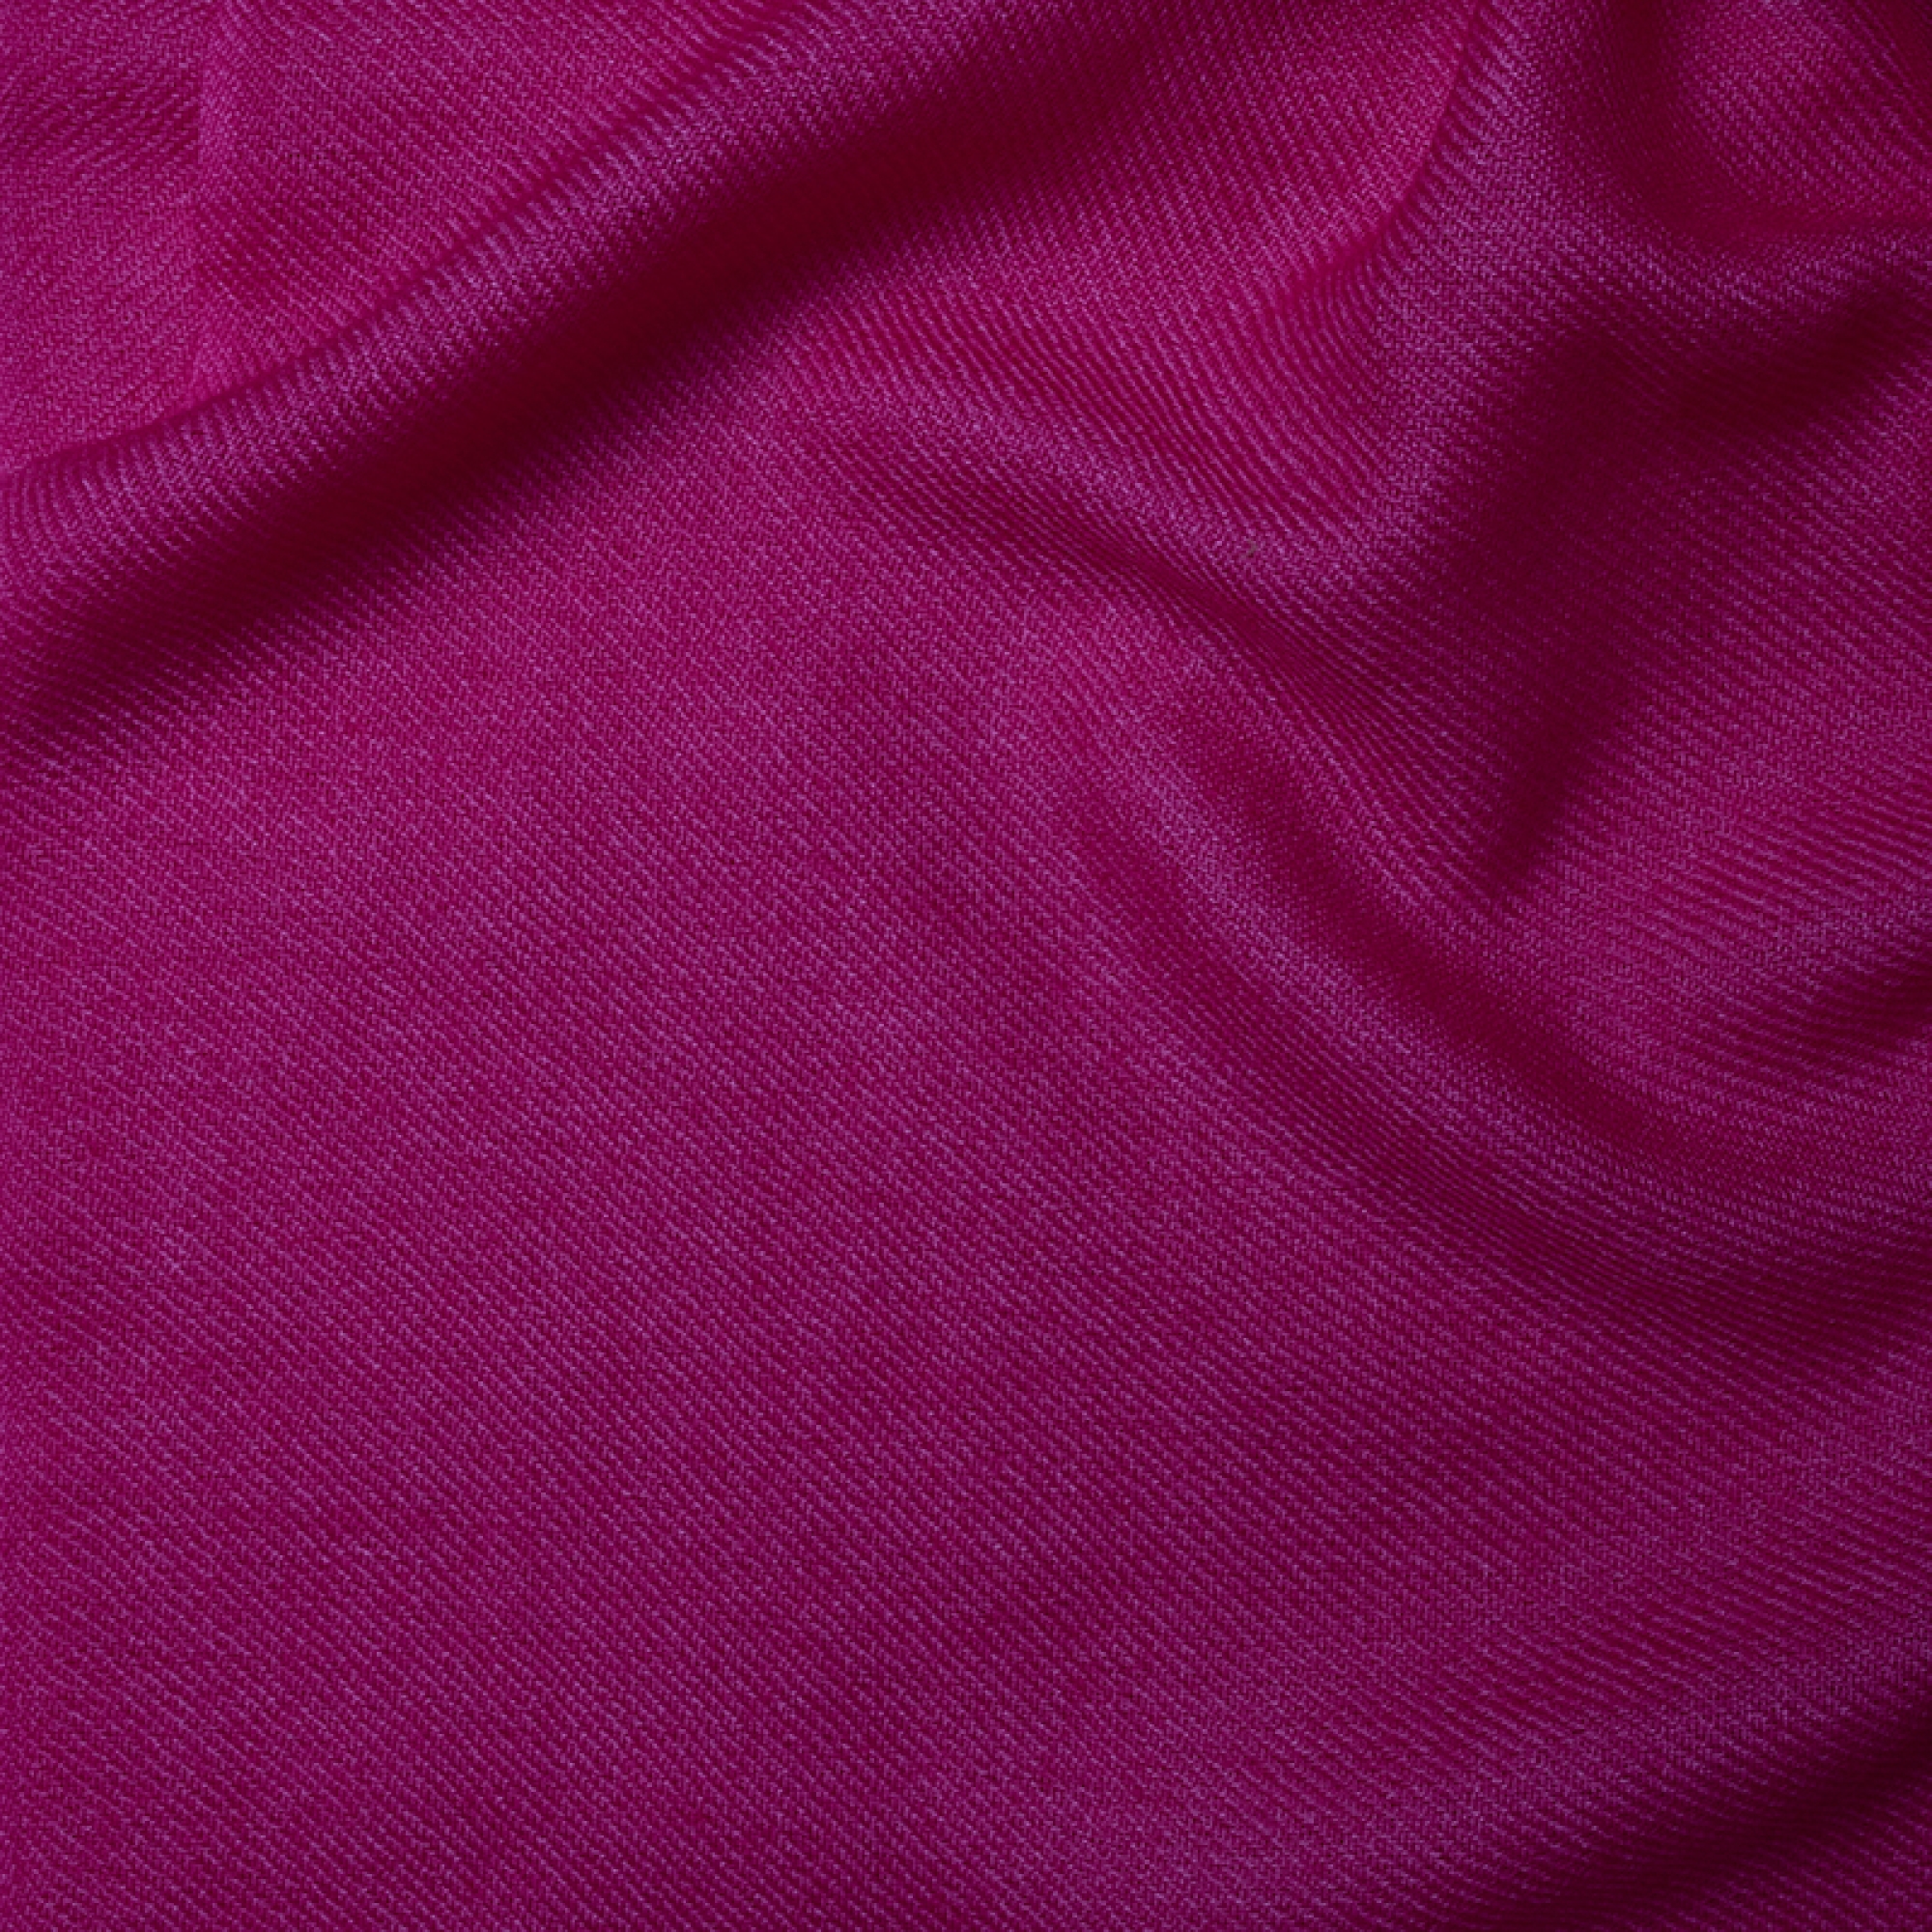 Cashmere accessories blanket toodoo plain m 180 x 220 flashing pink 180 x 220 cm